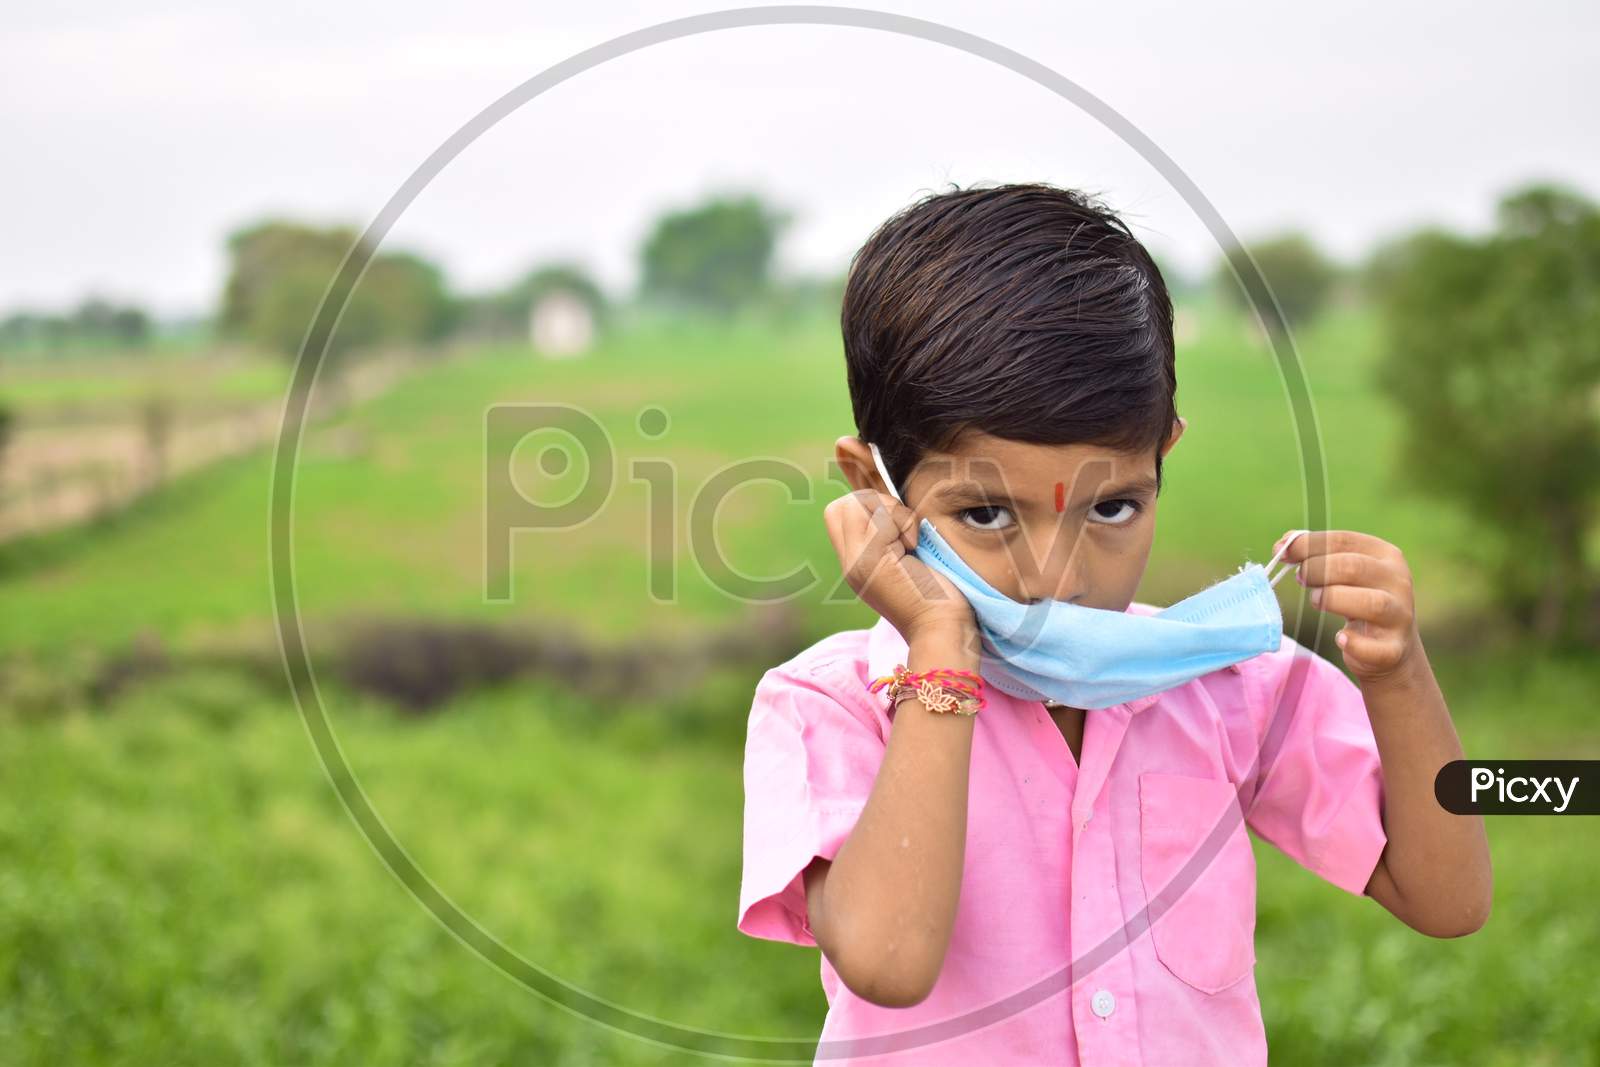 indian little kids using  blue mask on face in coronavirus